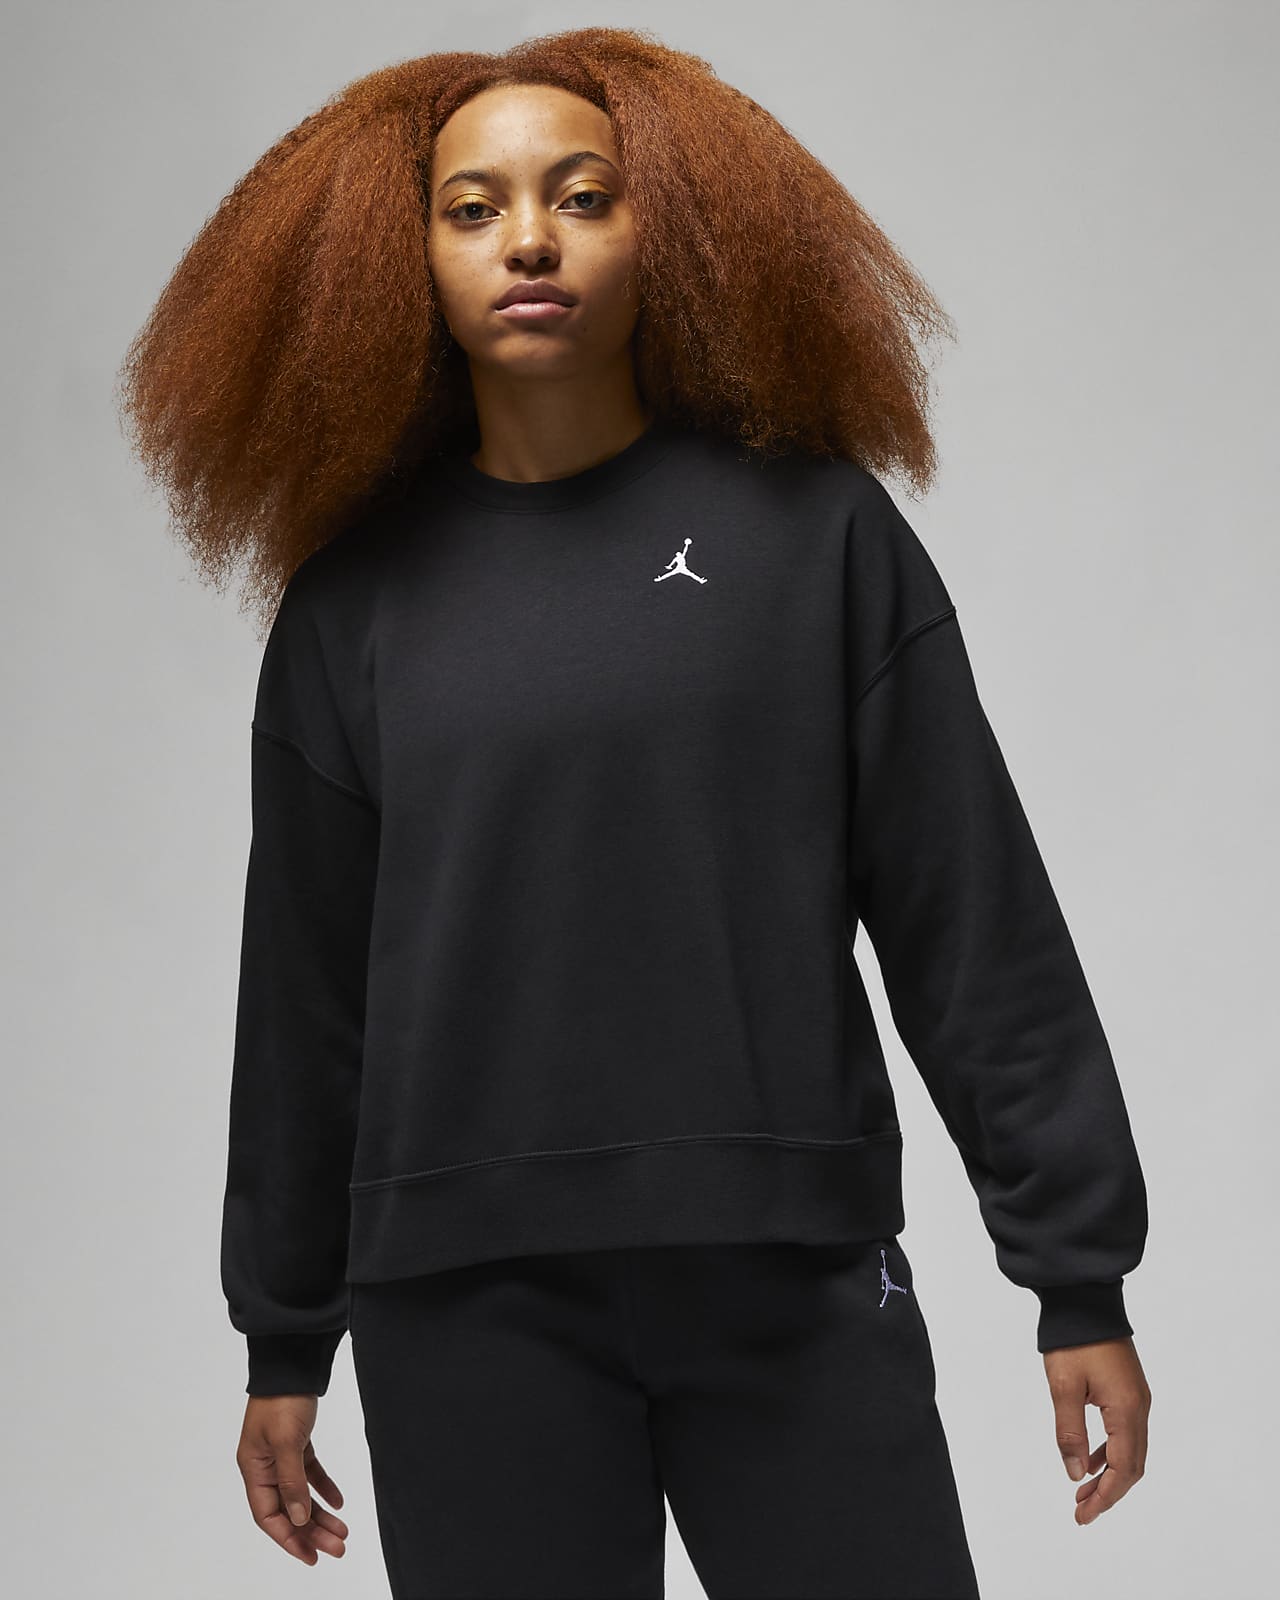 Brilliant Basics Women's Fleece Crew Neck Sweater - Black - Size Small